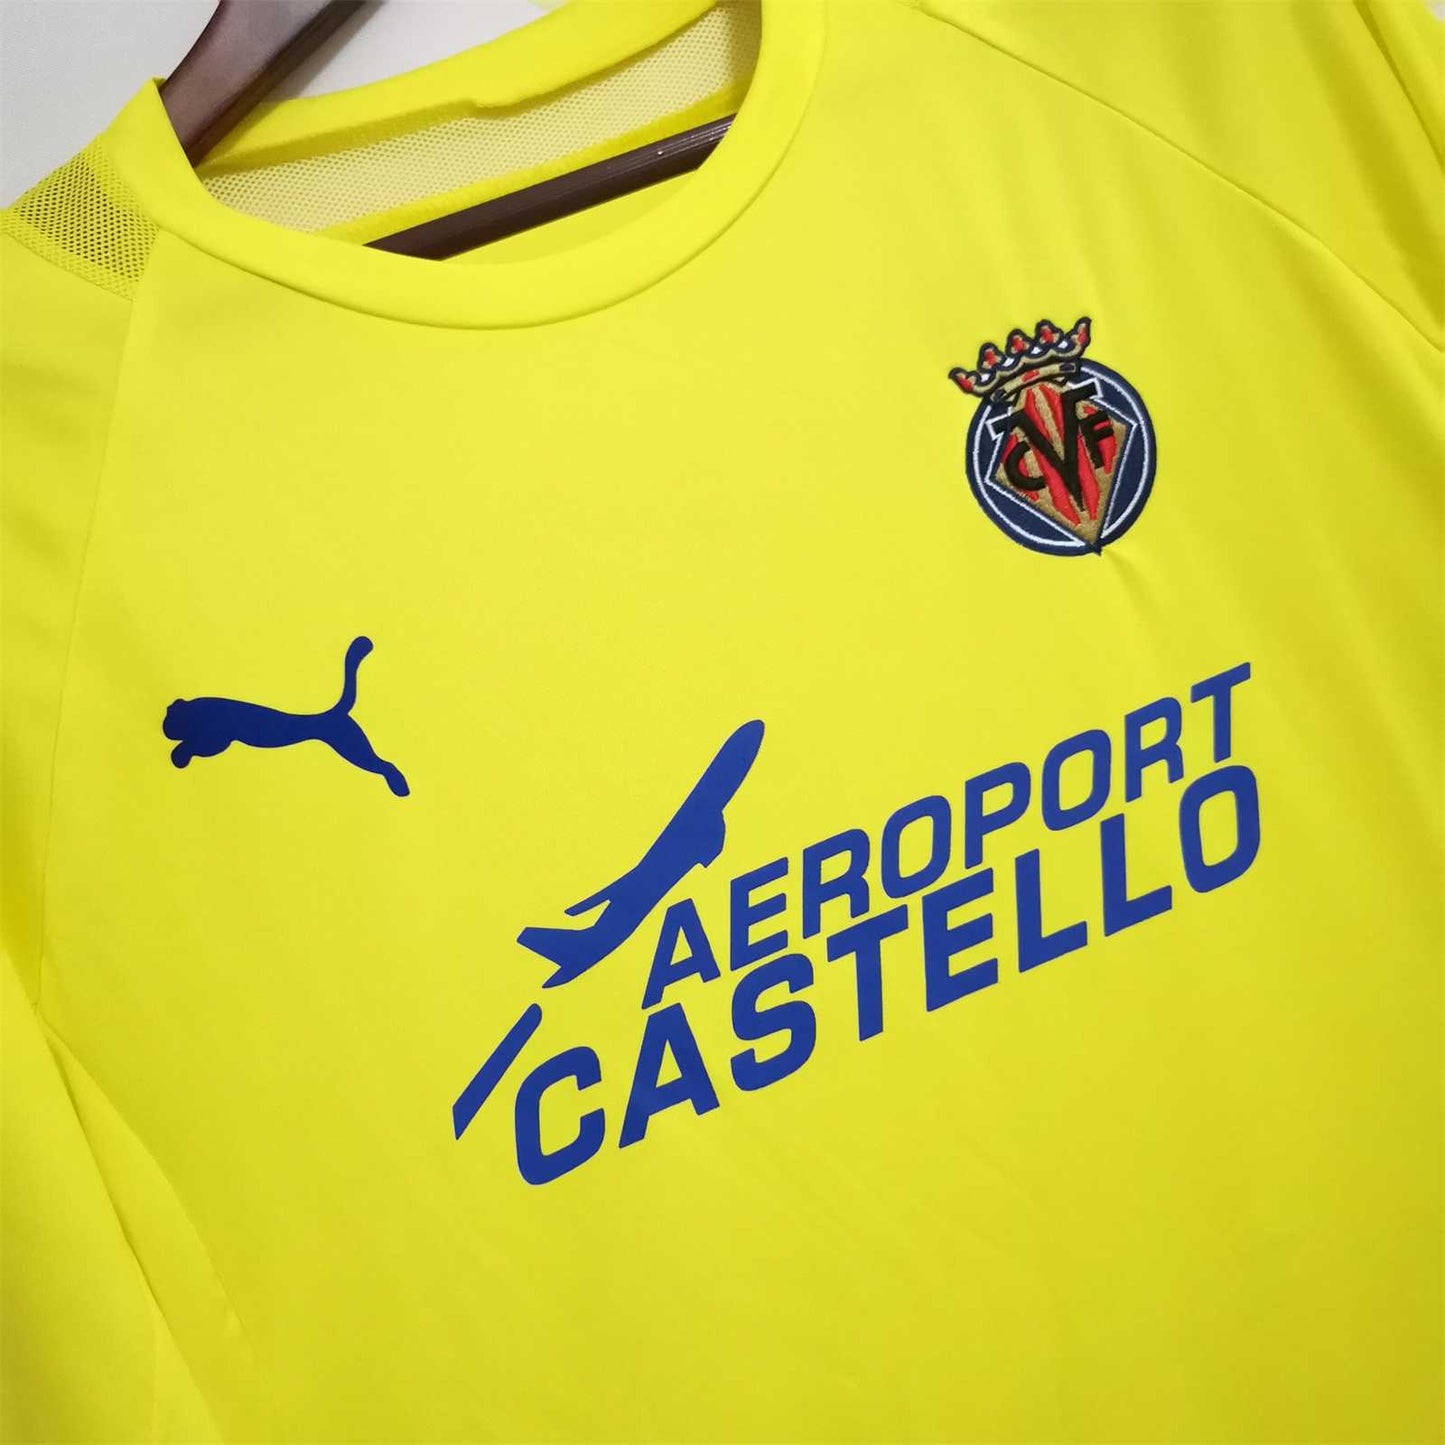 Villarreal 05-06 Kit